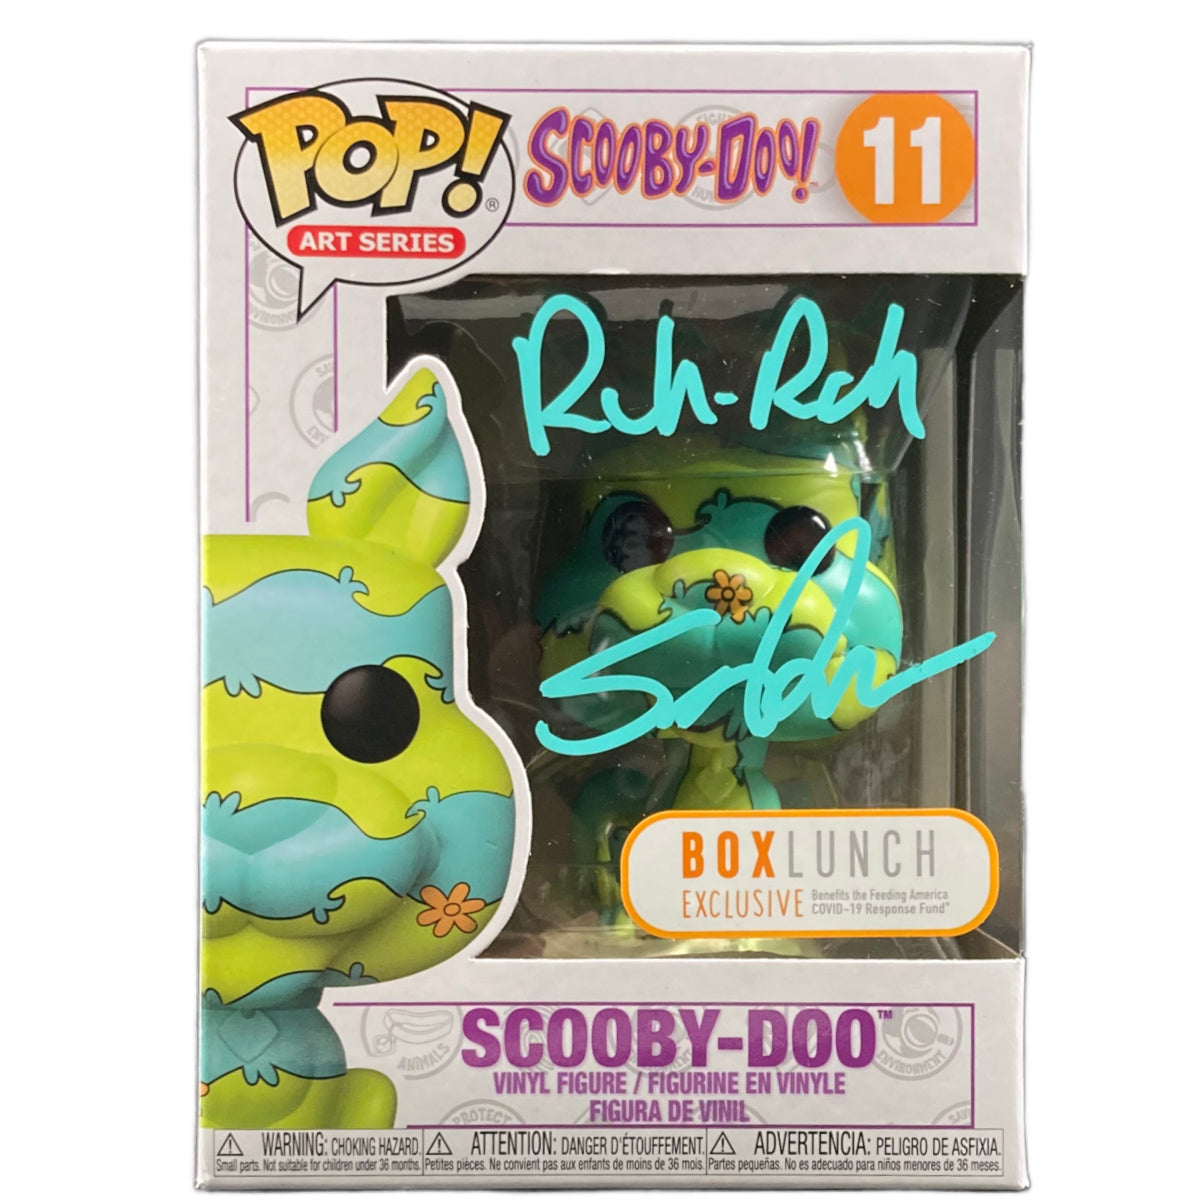 Scott Innes Signed Funko POP Scooby-Doo! 11 Box Lunch Autographed JSA COA